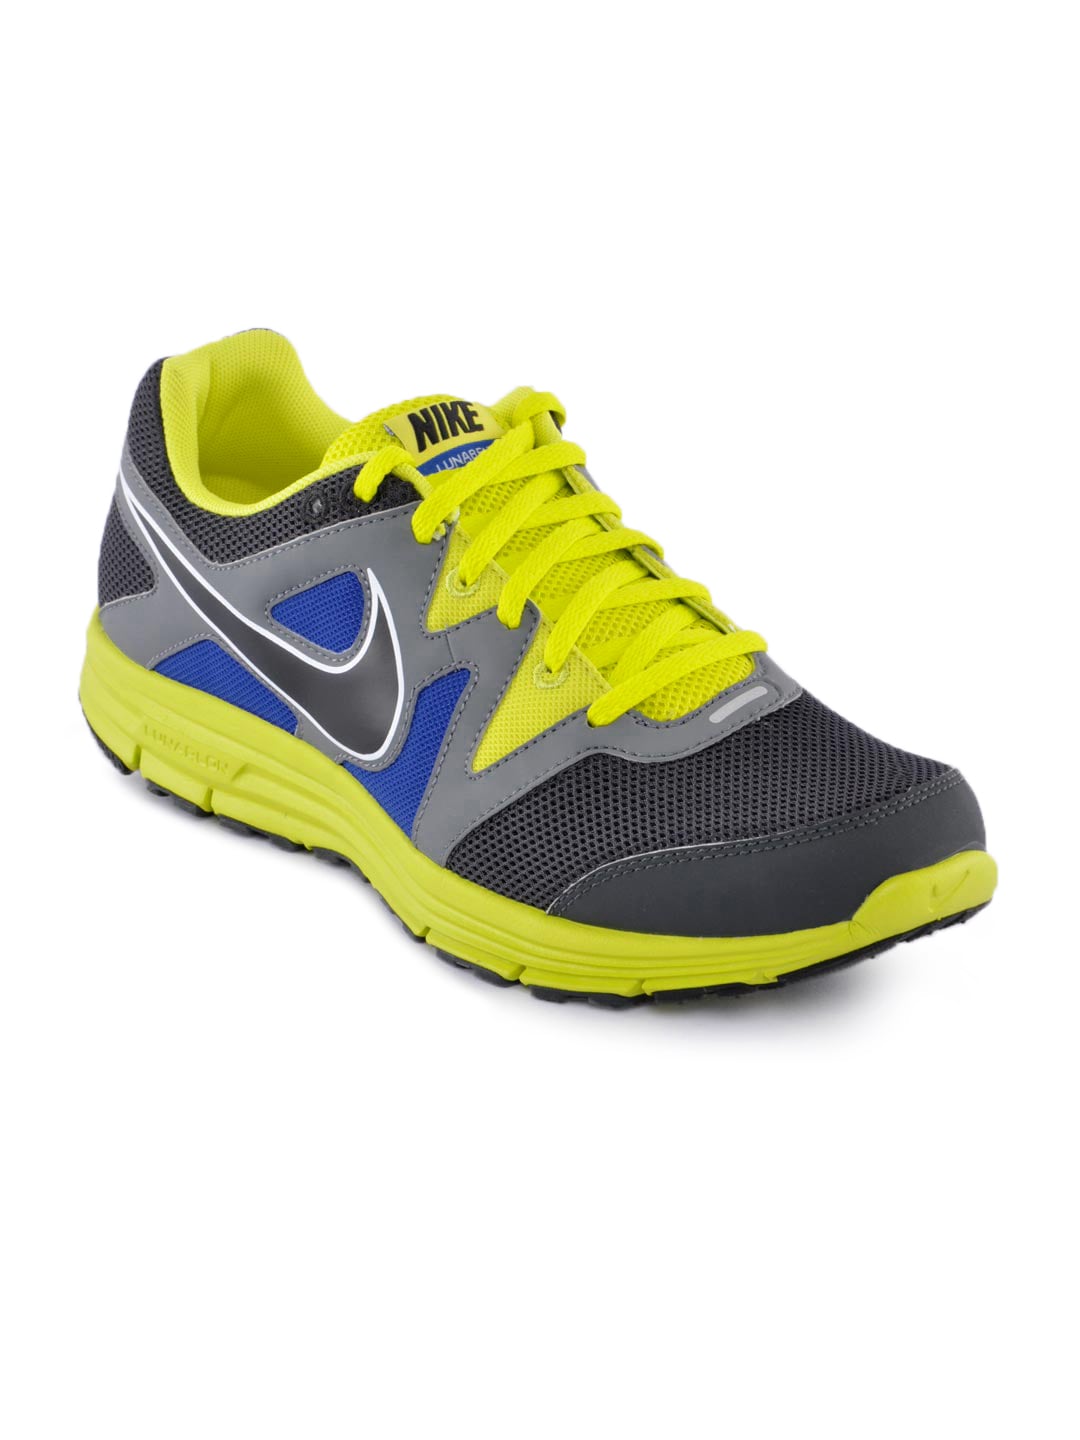 Nike Men Lunarfly +3 Grey Sports Shoes